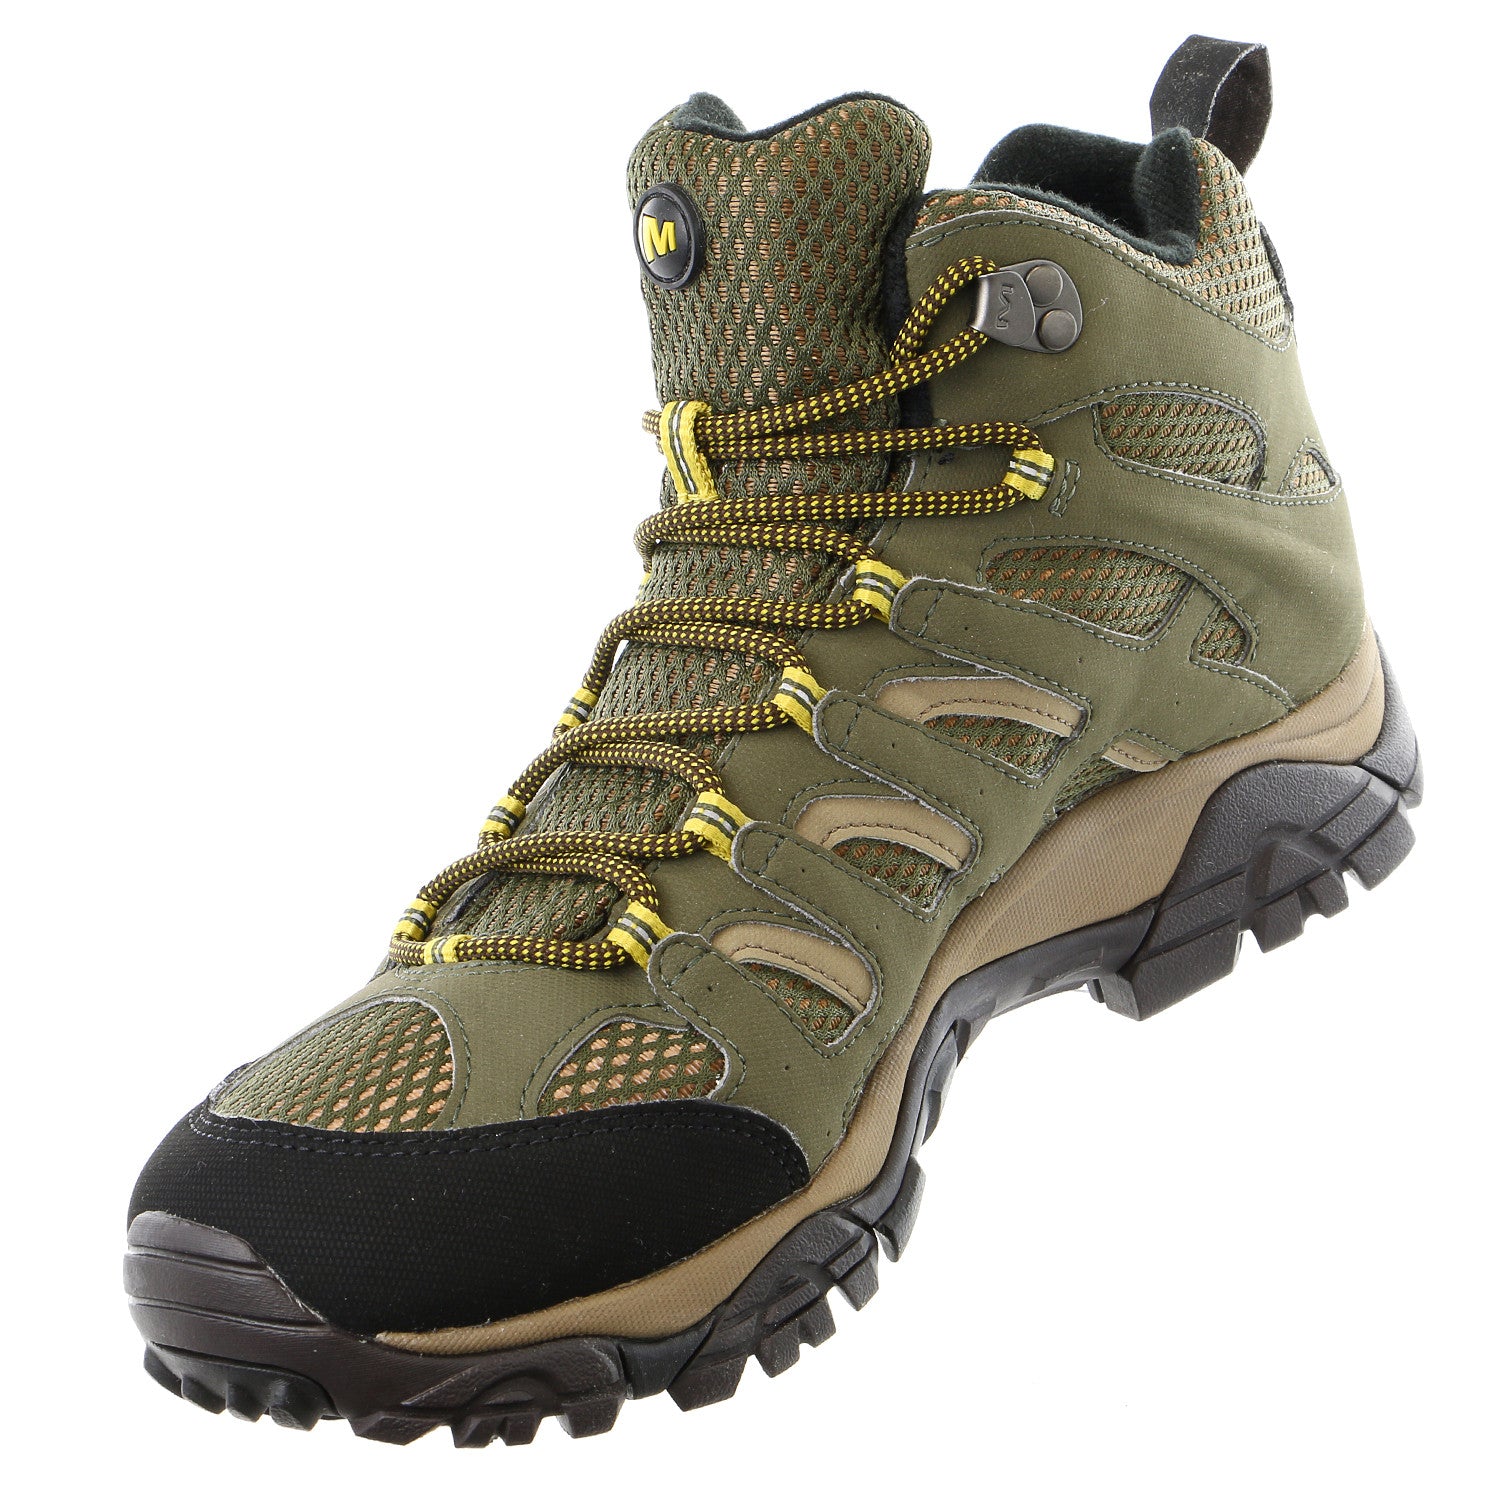 Merrell Moab Mid Waterproof Hiking Boot - Men's - Shoplifestyle